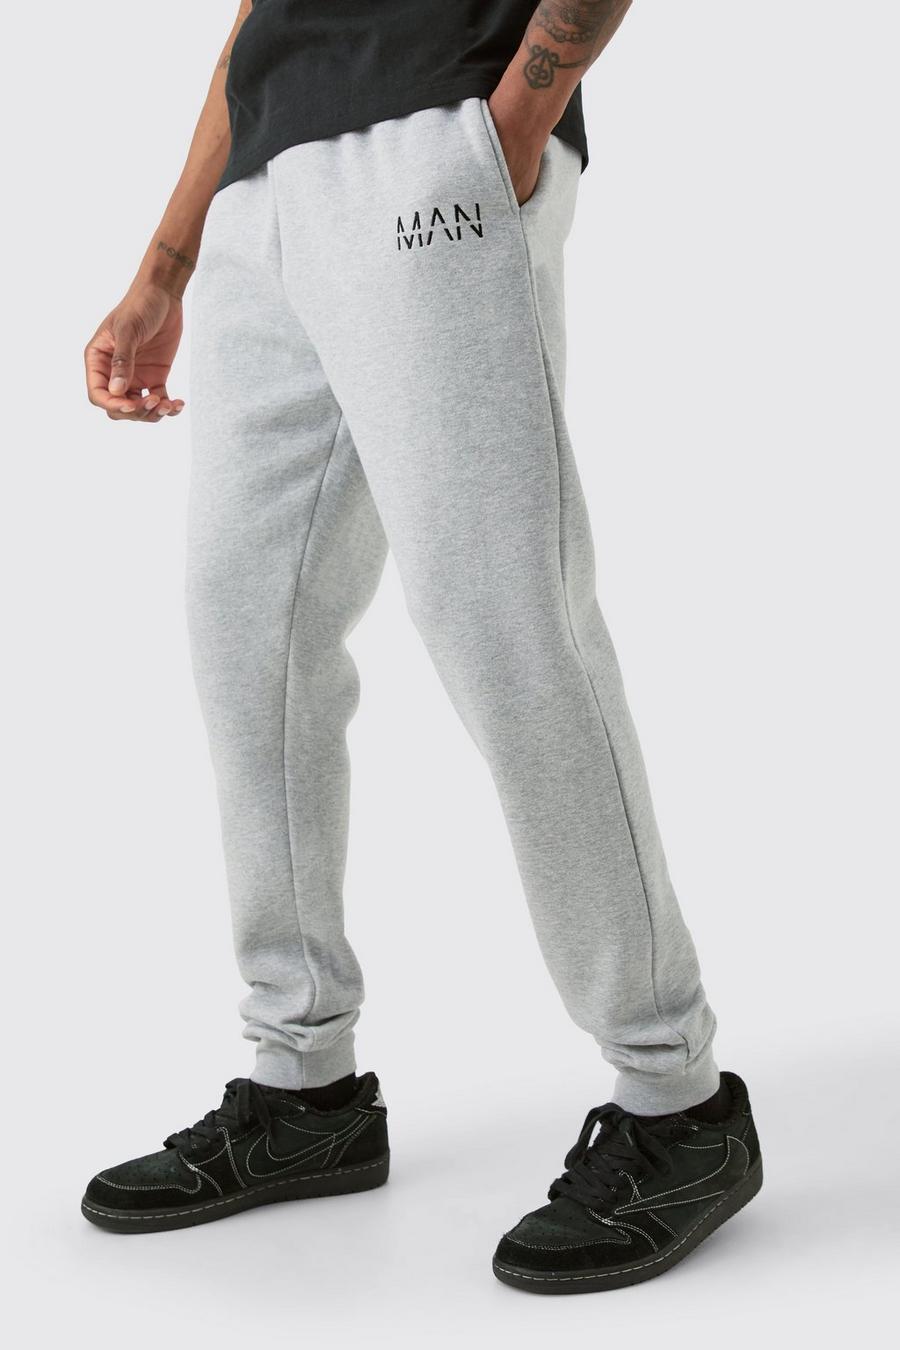 Pantalón deportivo Tall MAN ajustado en gris jaspeado, Grey marl image number 1